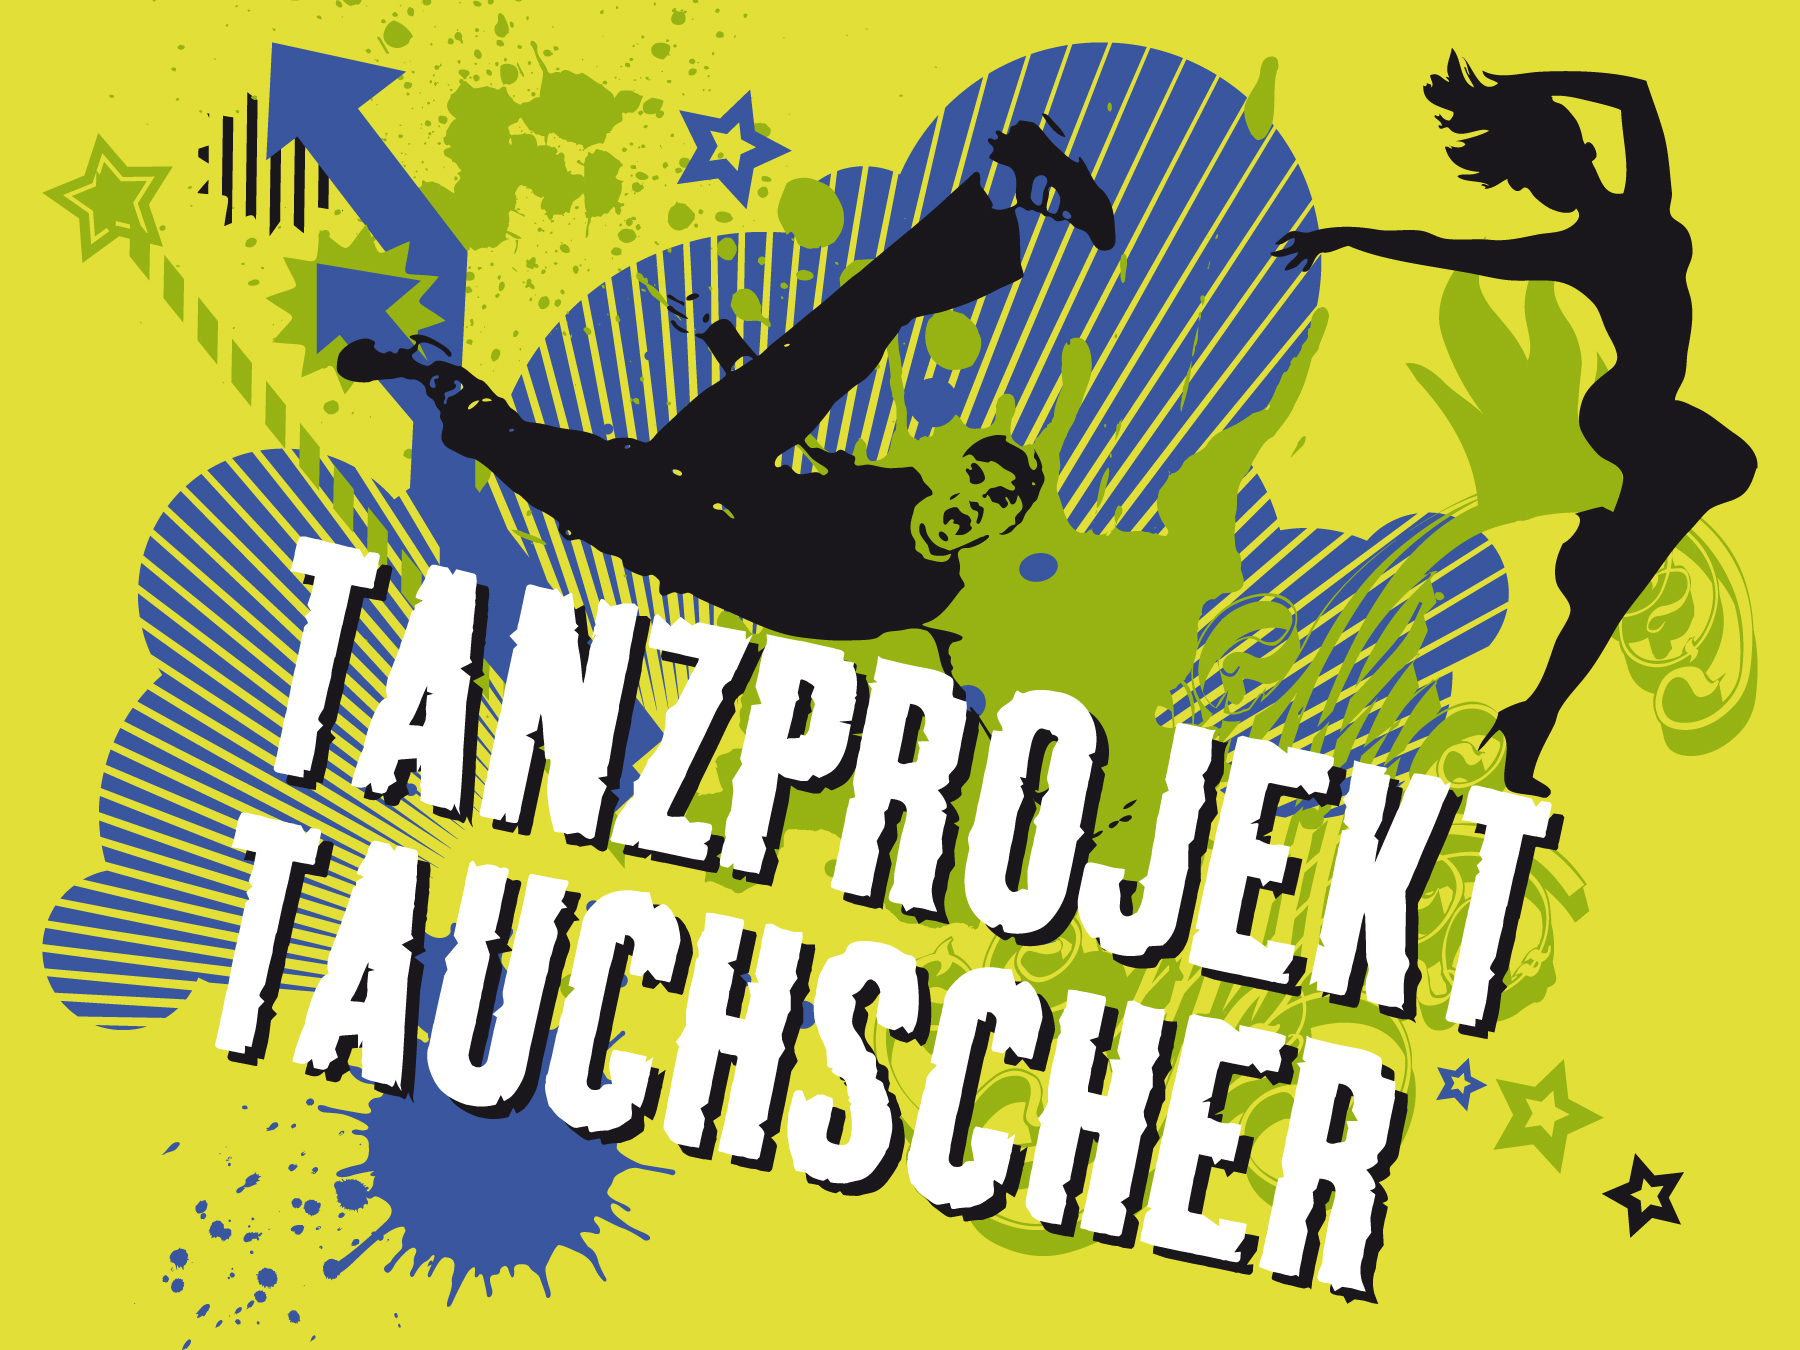 Tanzprojekt TAUCHSCHER